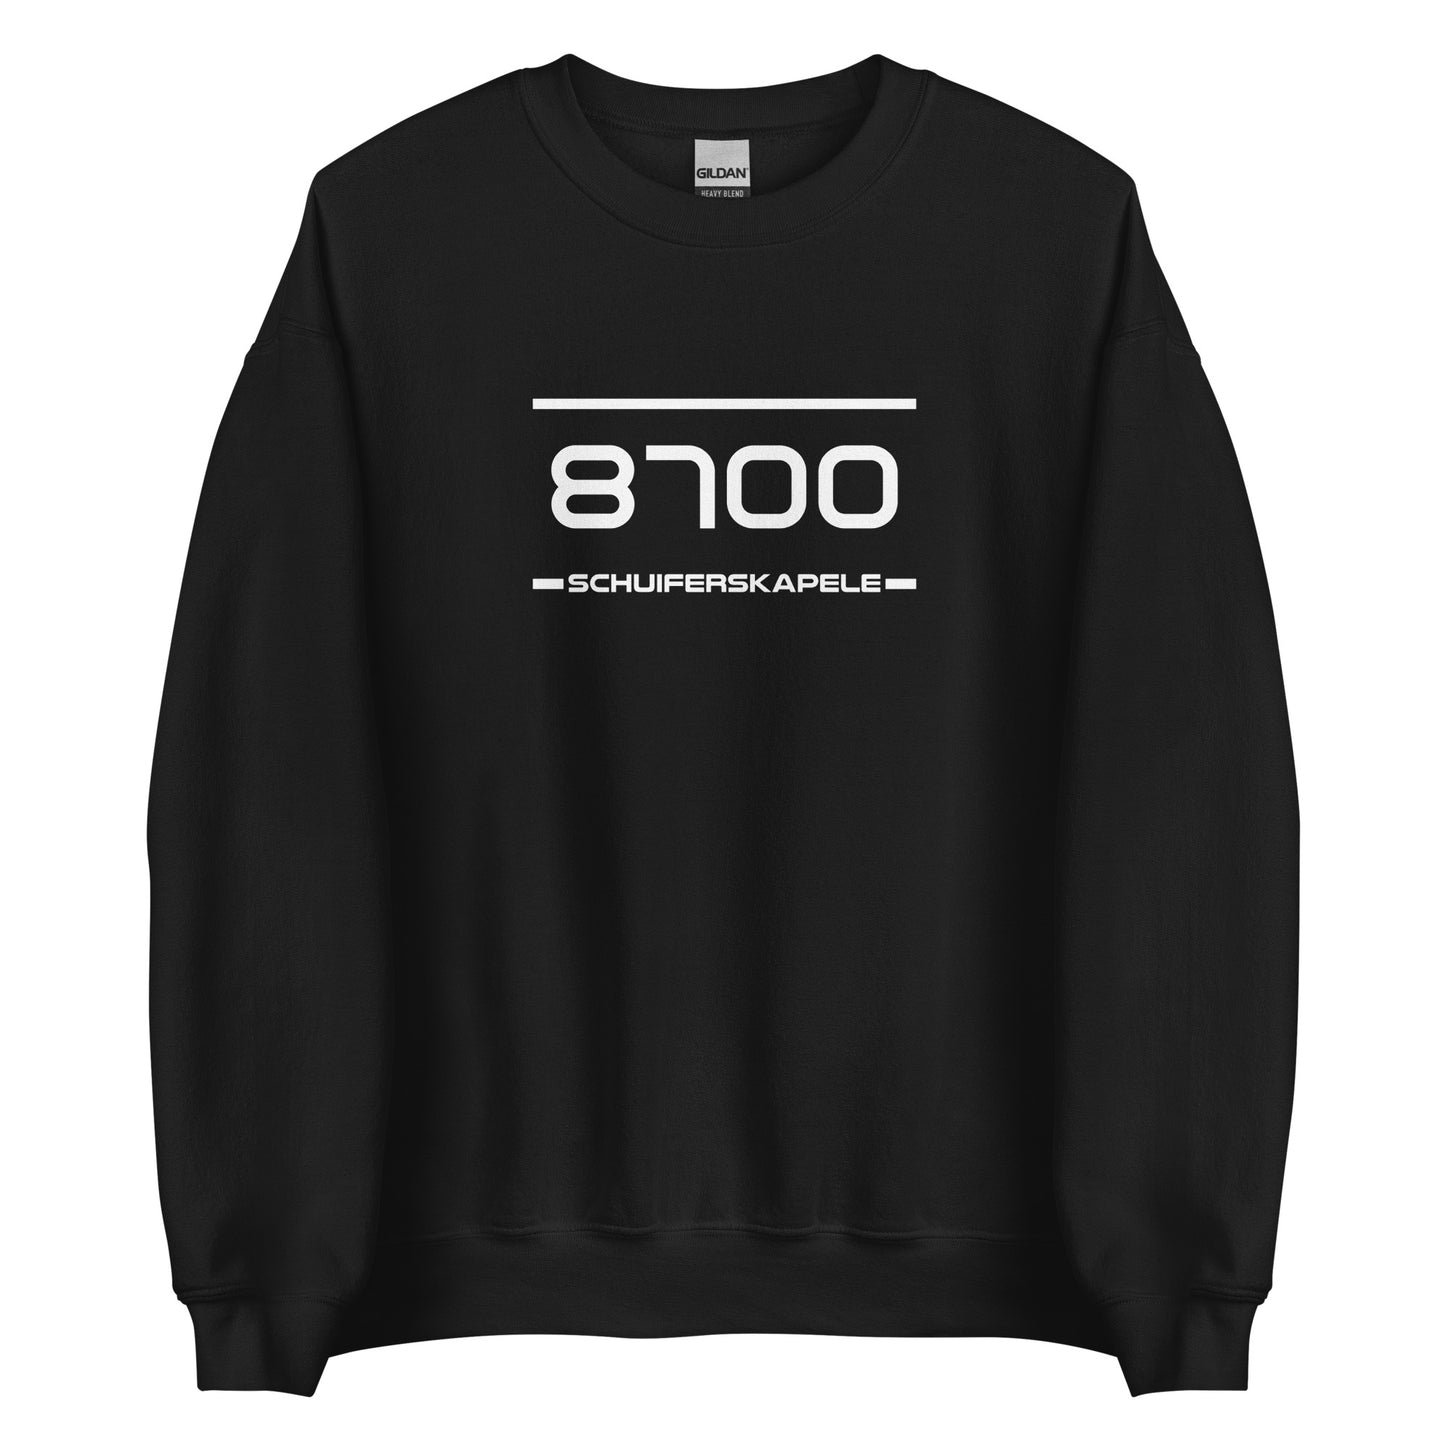 Sweater - 8700 - Schuiferskapelle (M/V)